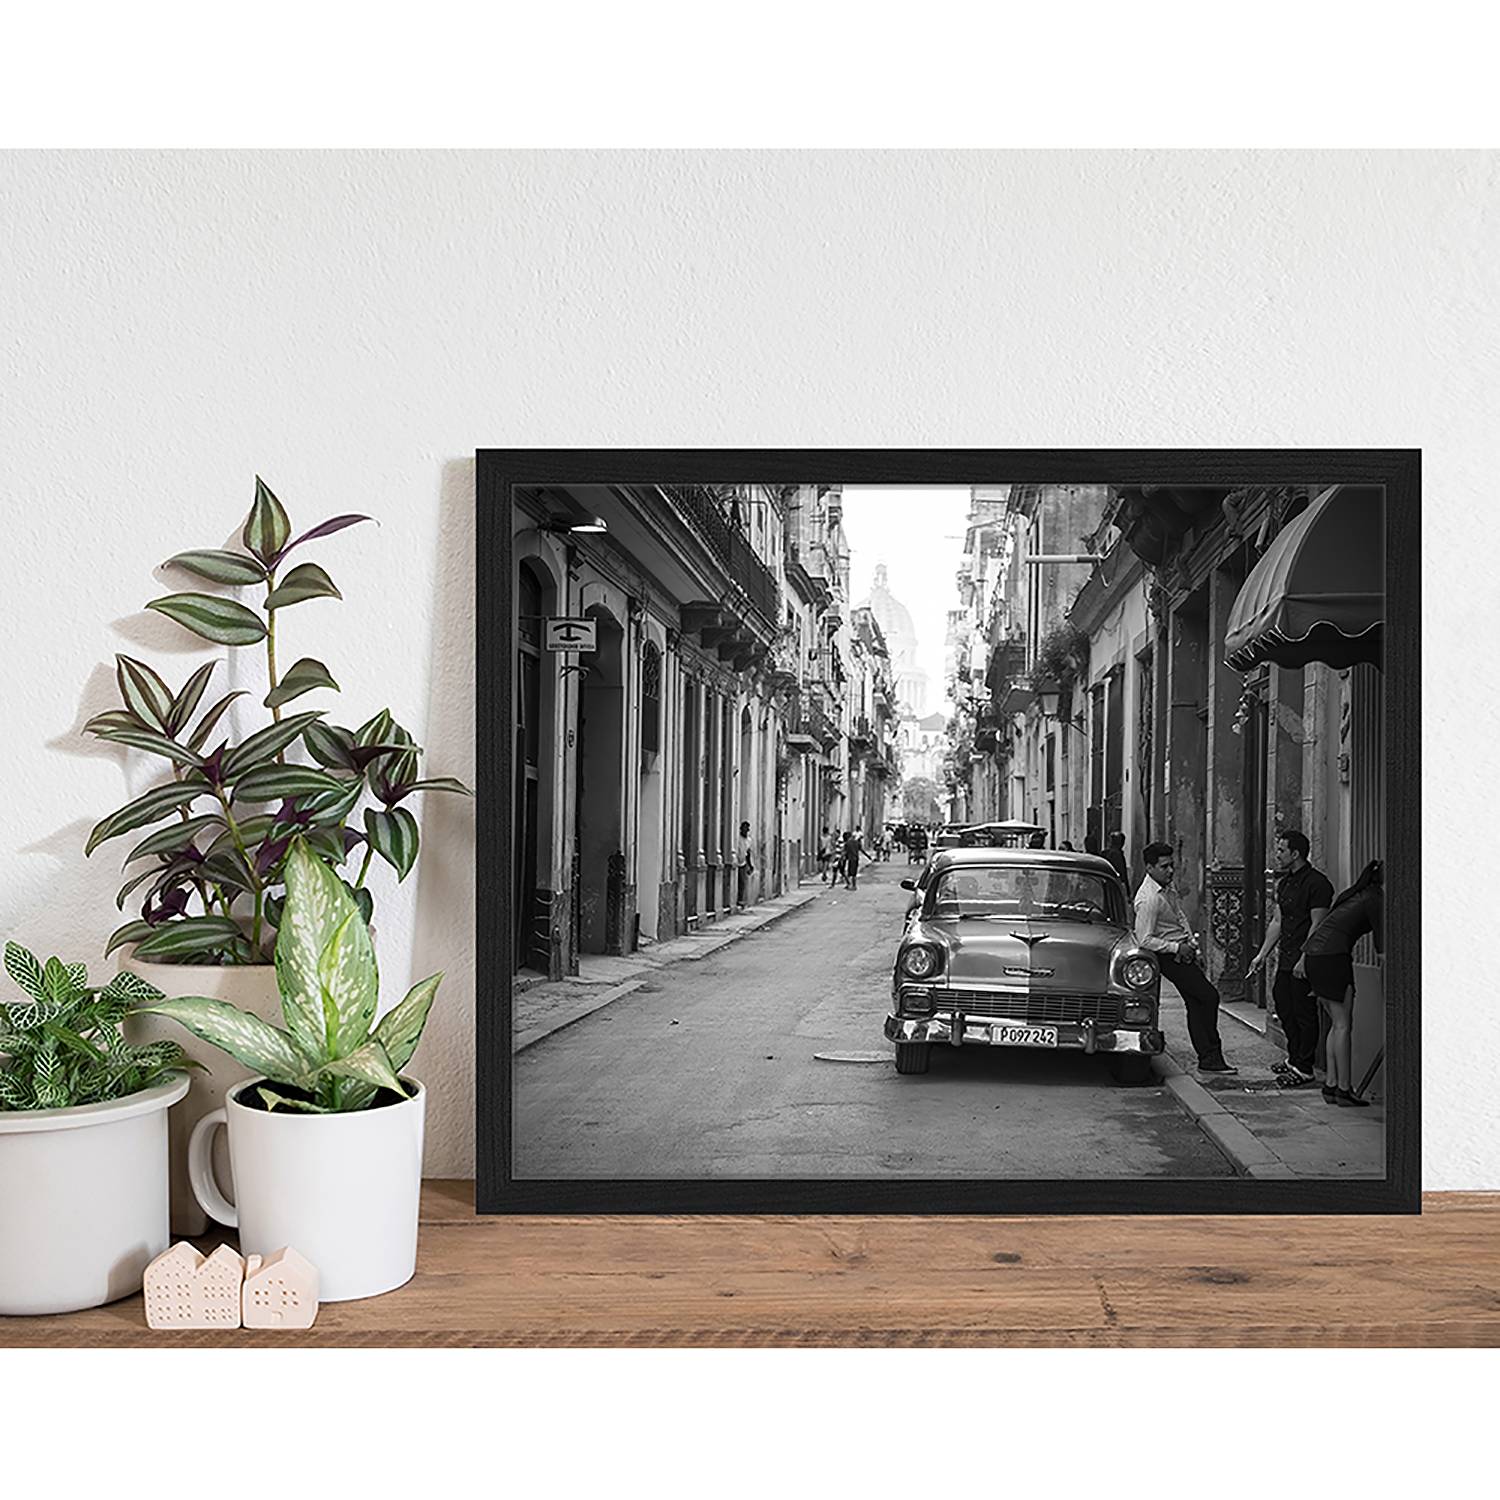 Bild 1950s Chevy in Havana, Cuba von Any Image